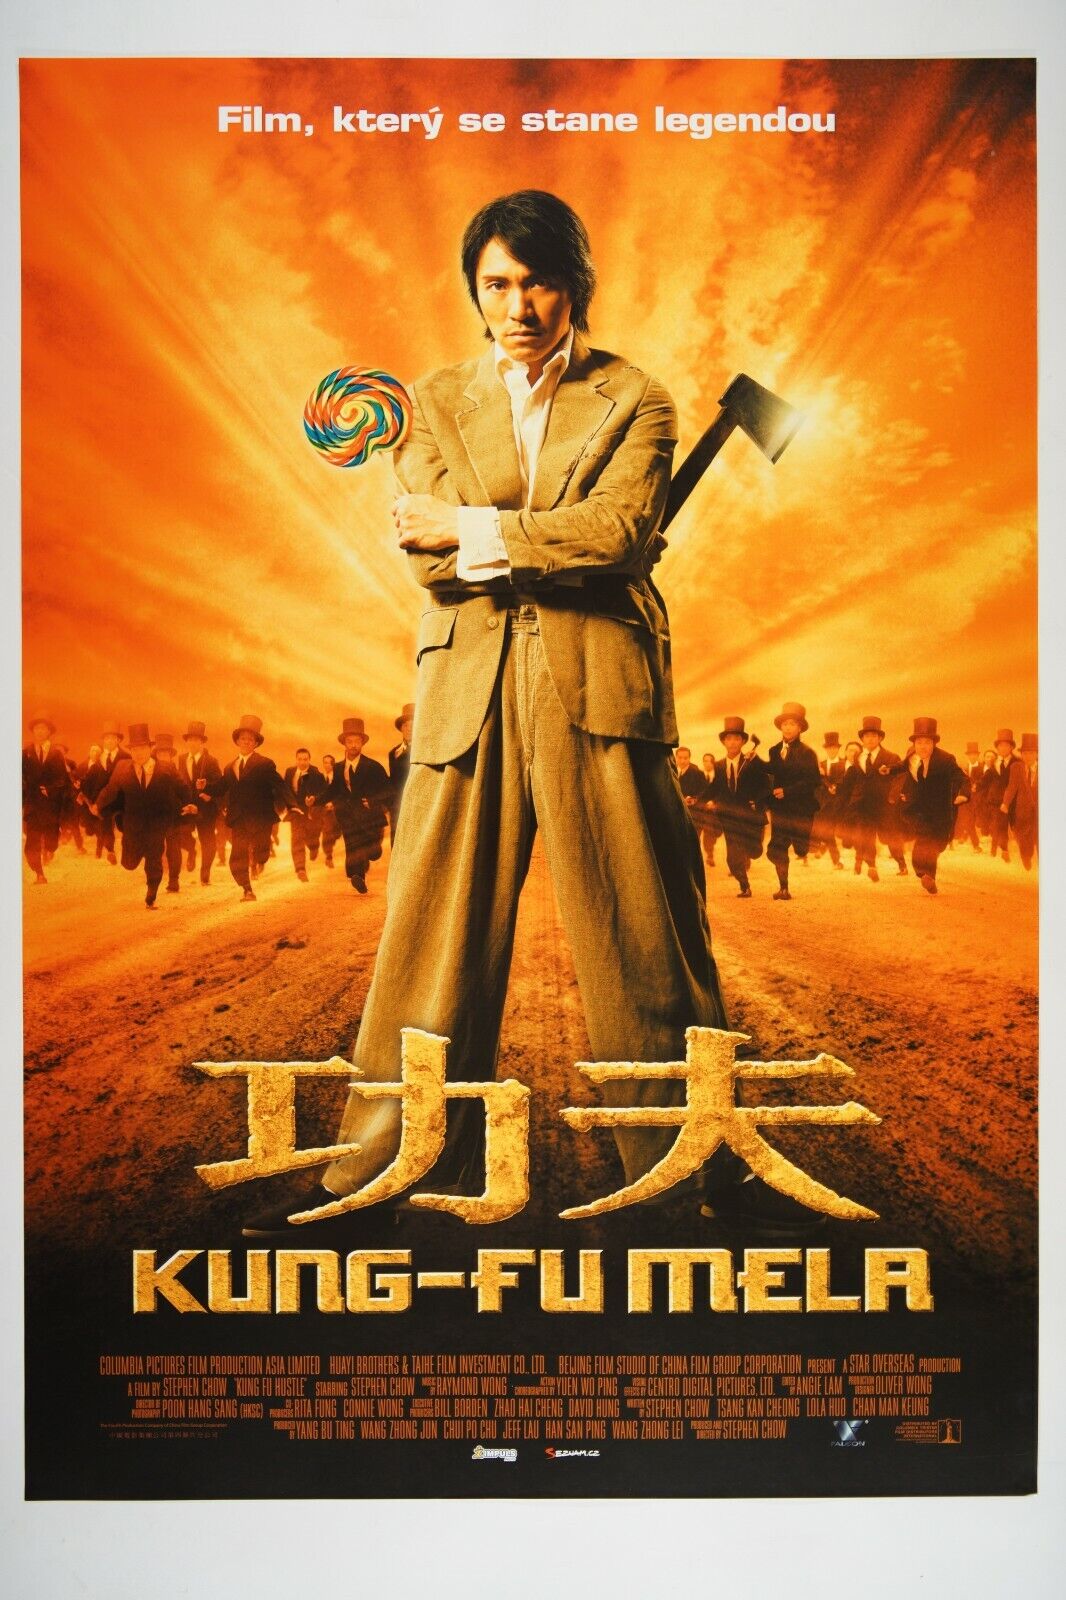 Kung Fu Hustle Wallpapers